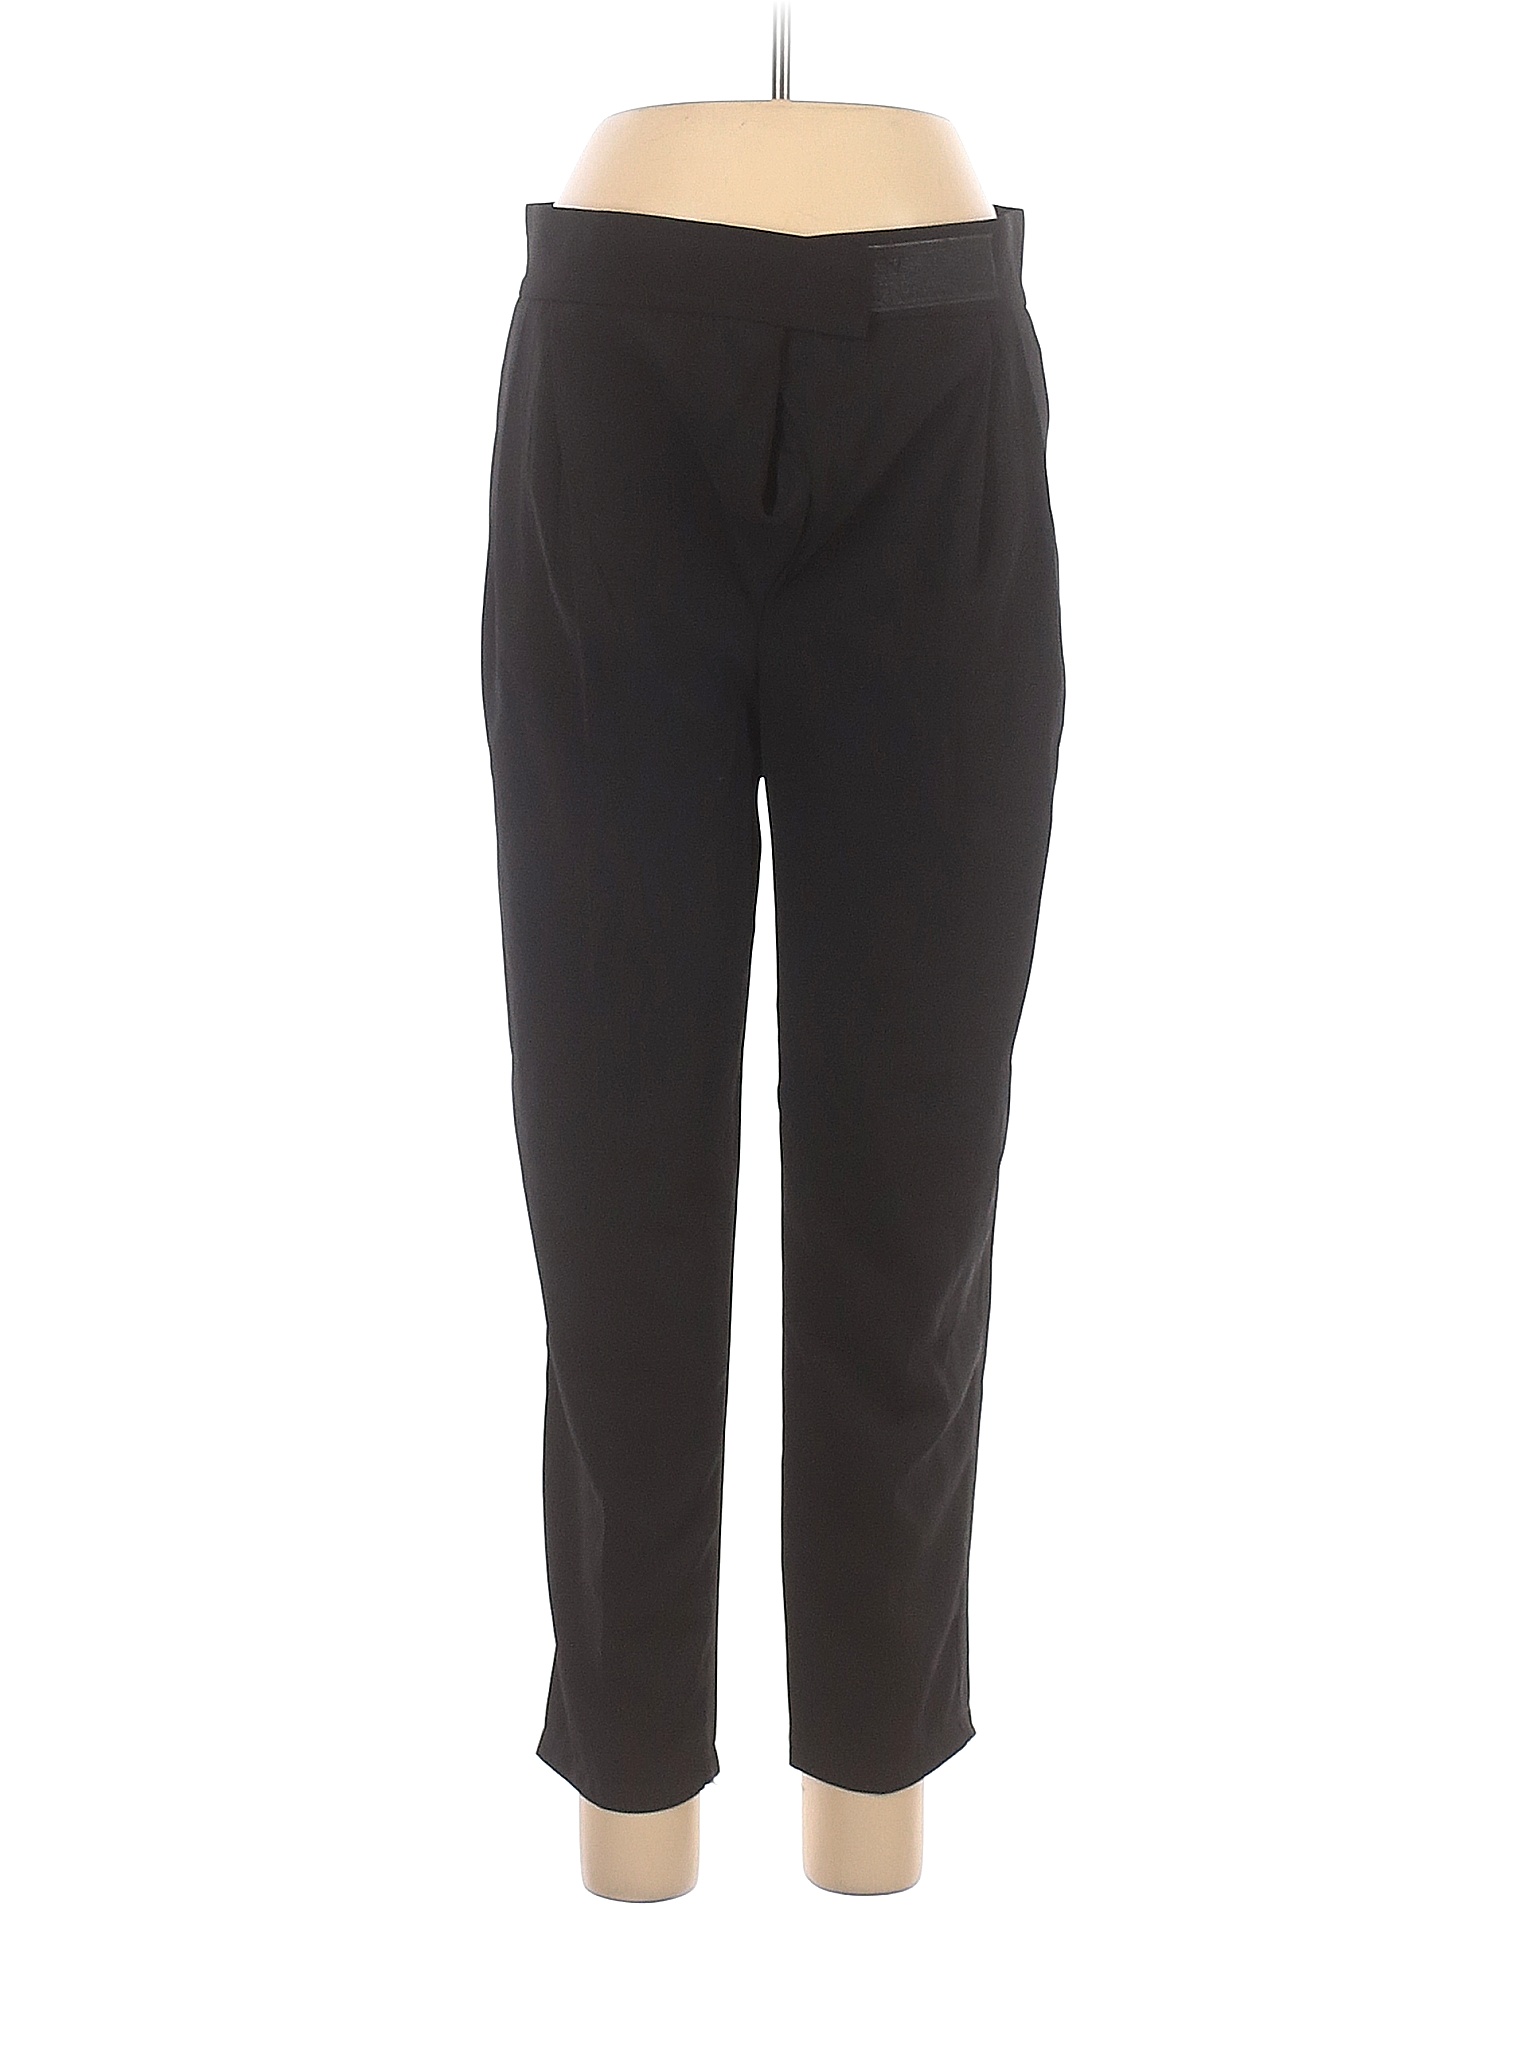 ZX Solid Black Dress Pants Size L - 93% off | ThredUp